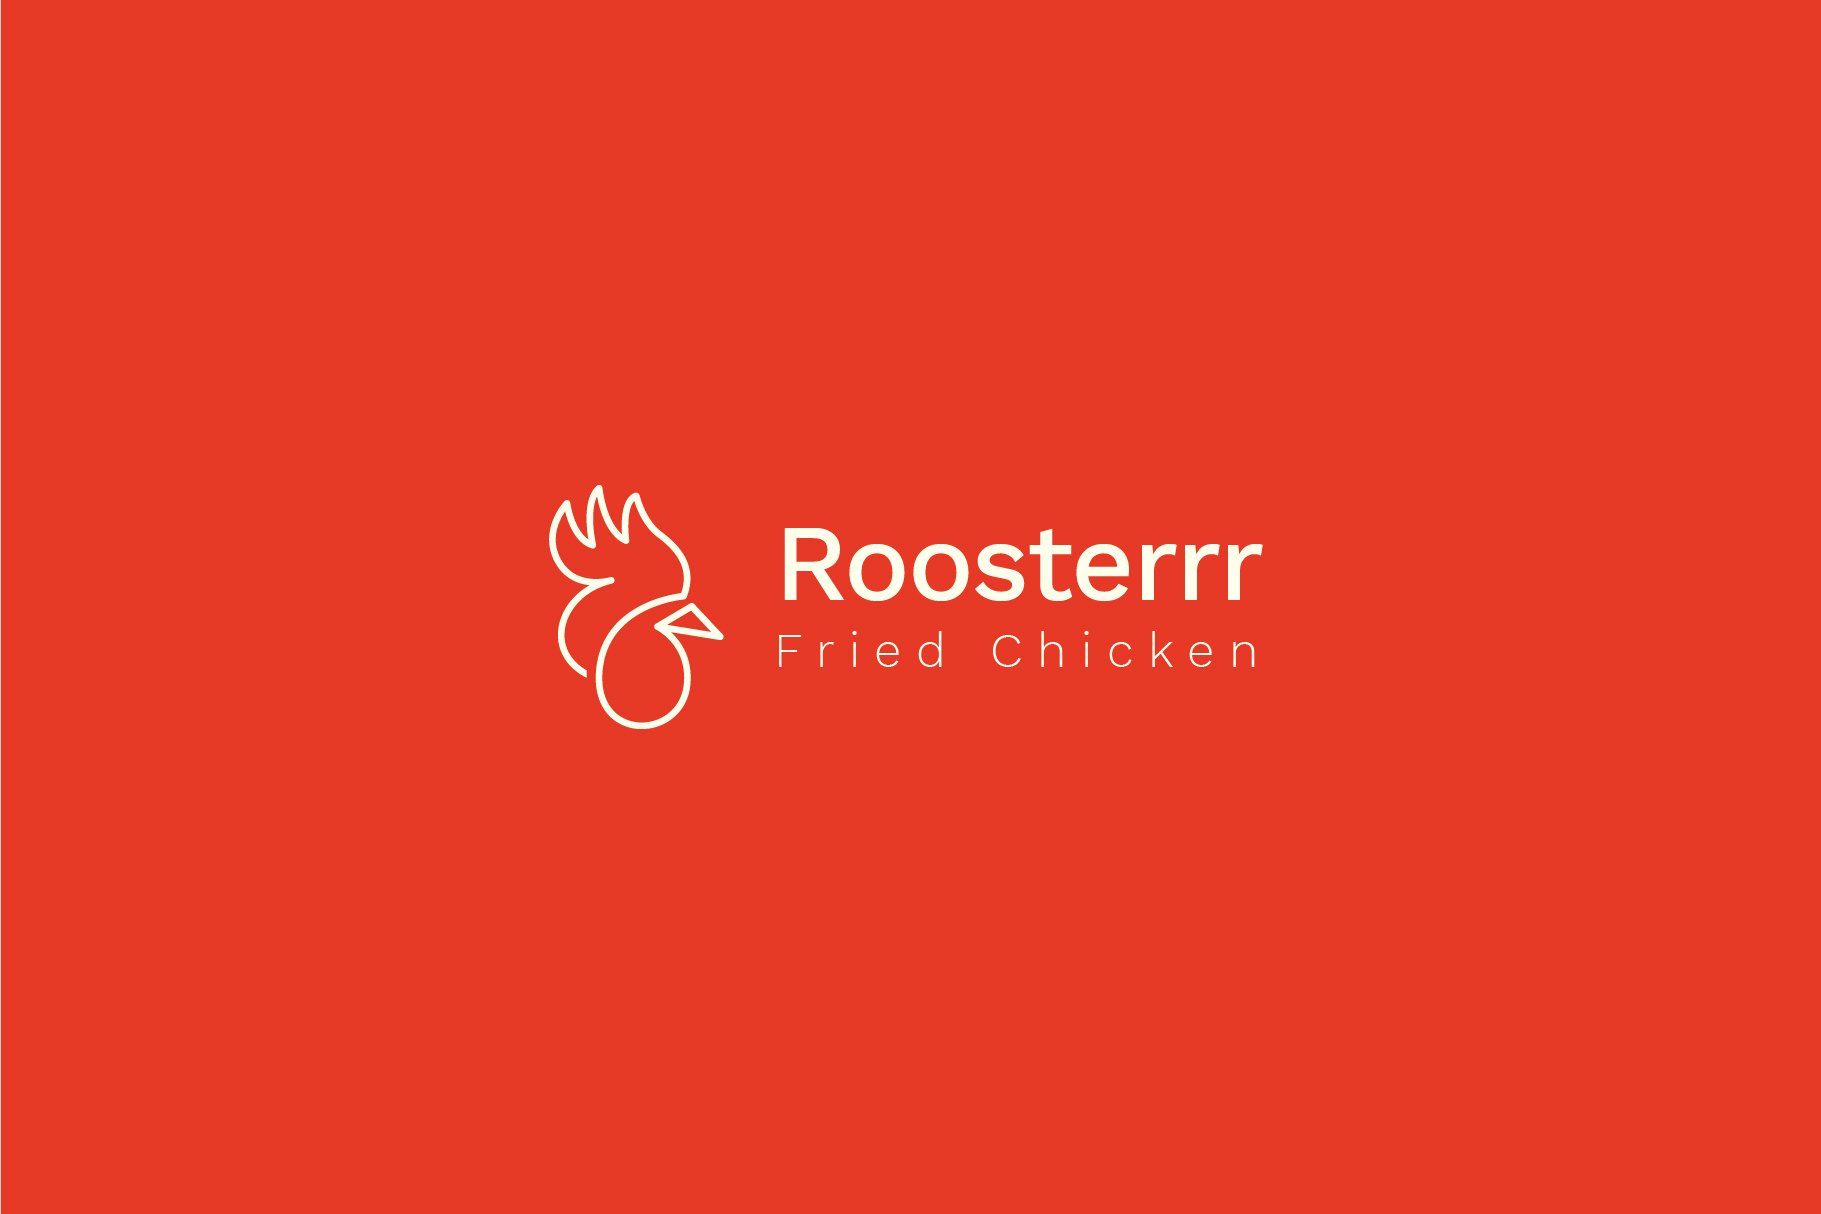 roosterrr logo 02 367